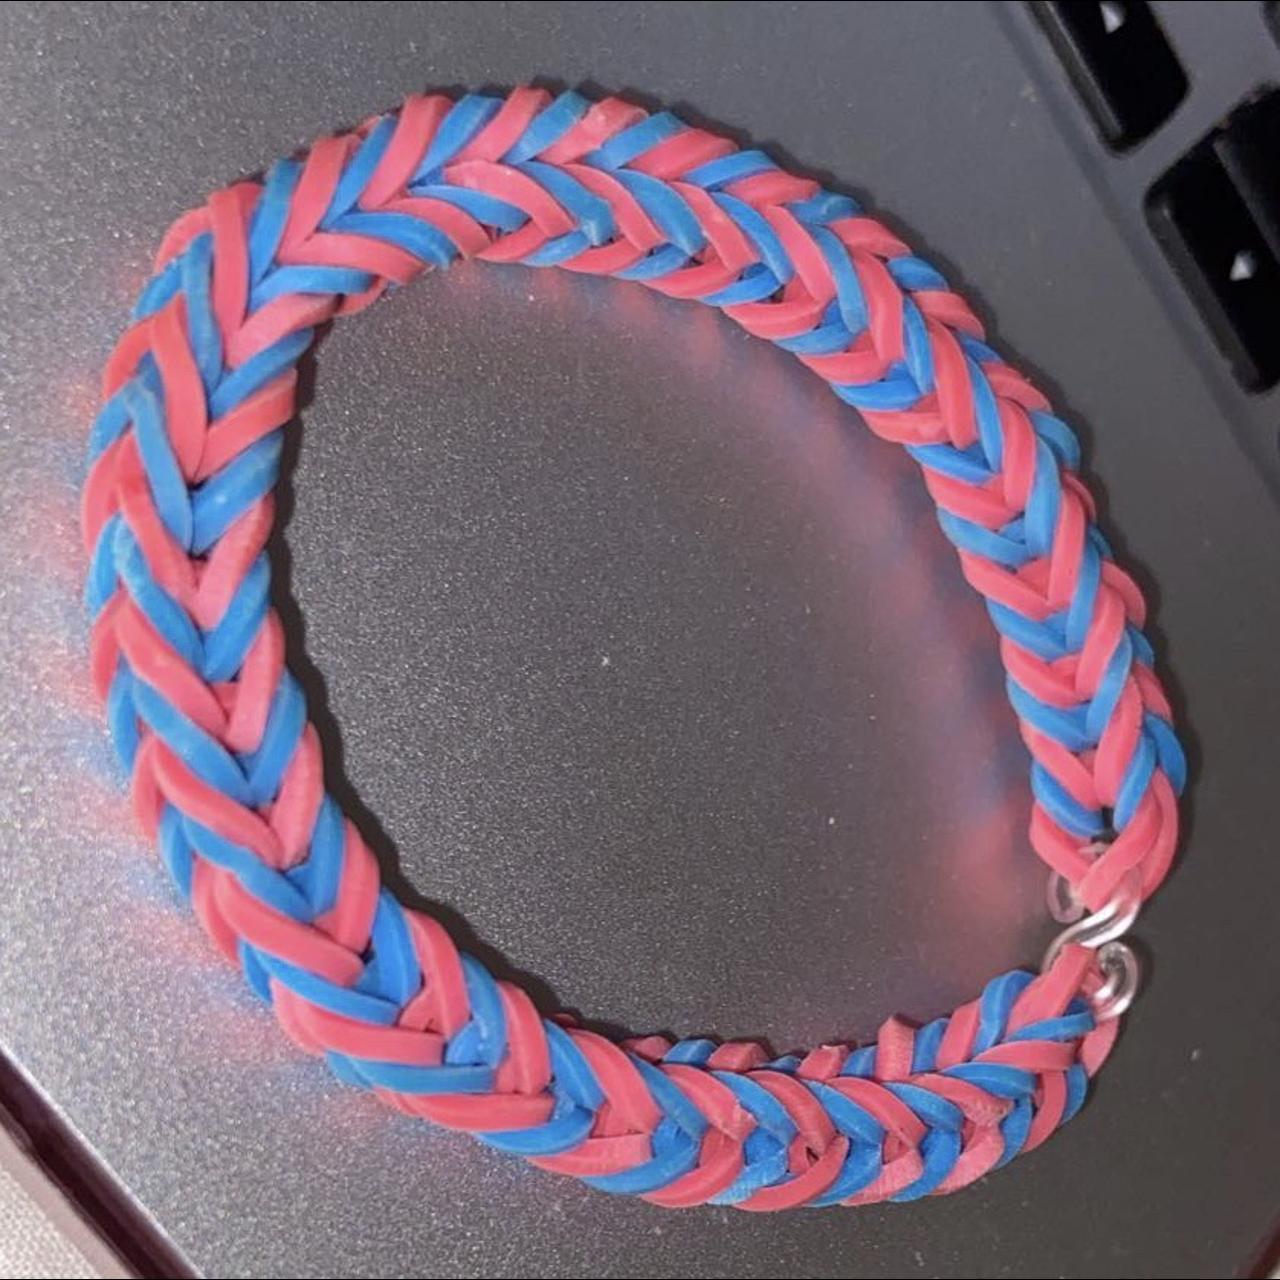 Blue and White Fishtail Bracelet Pink